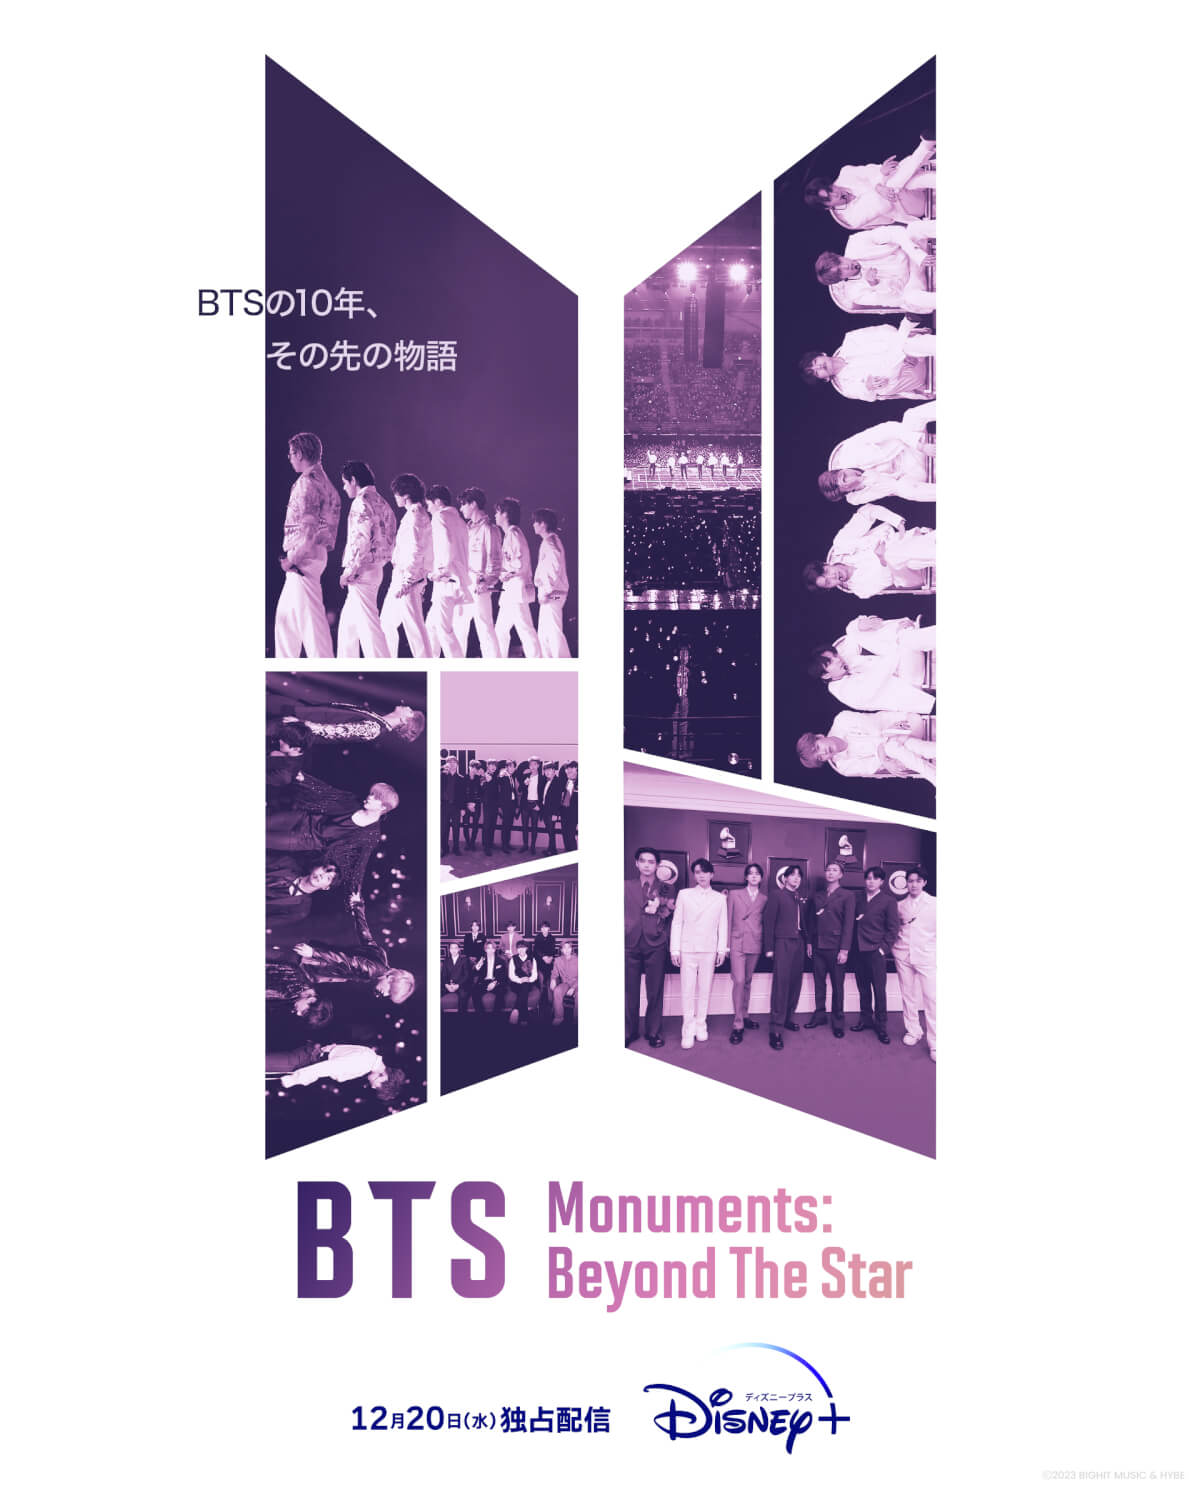 『BTS Monuments: Beyond The Star』の作品画像